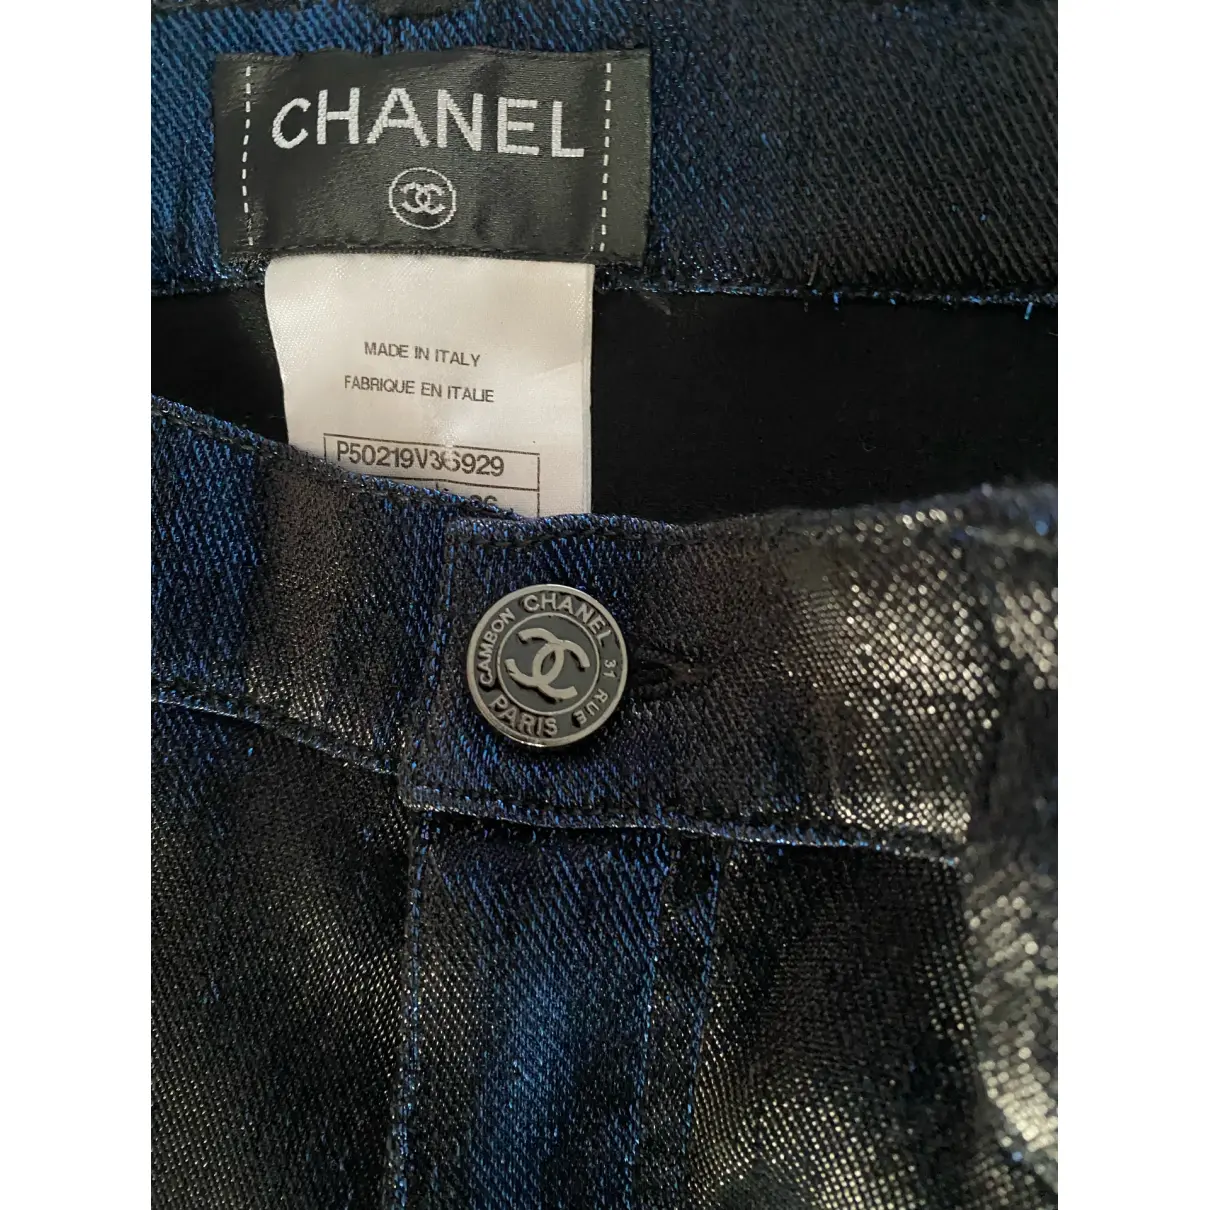 Slim jeans Chanel